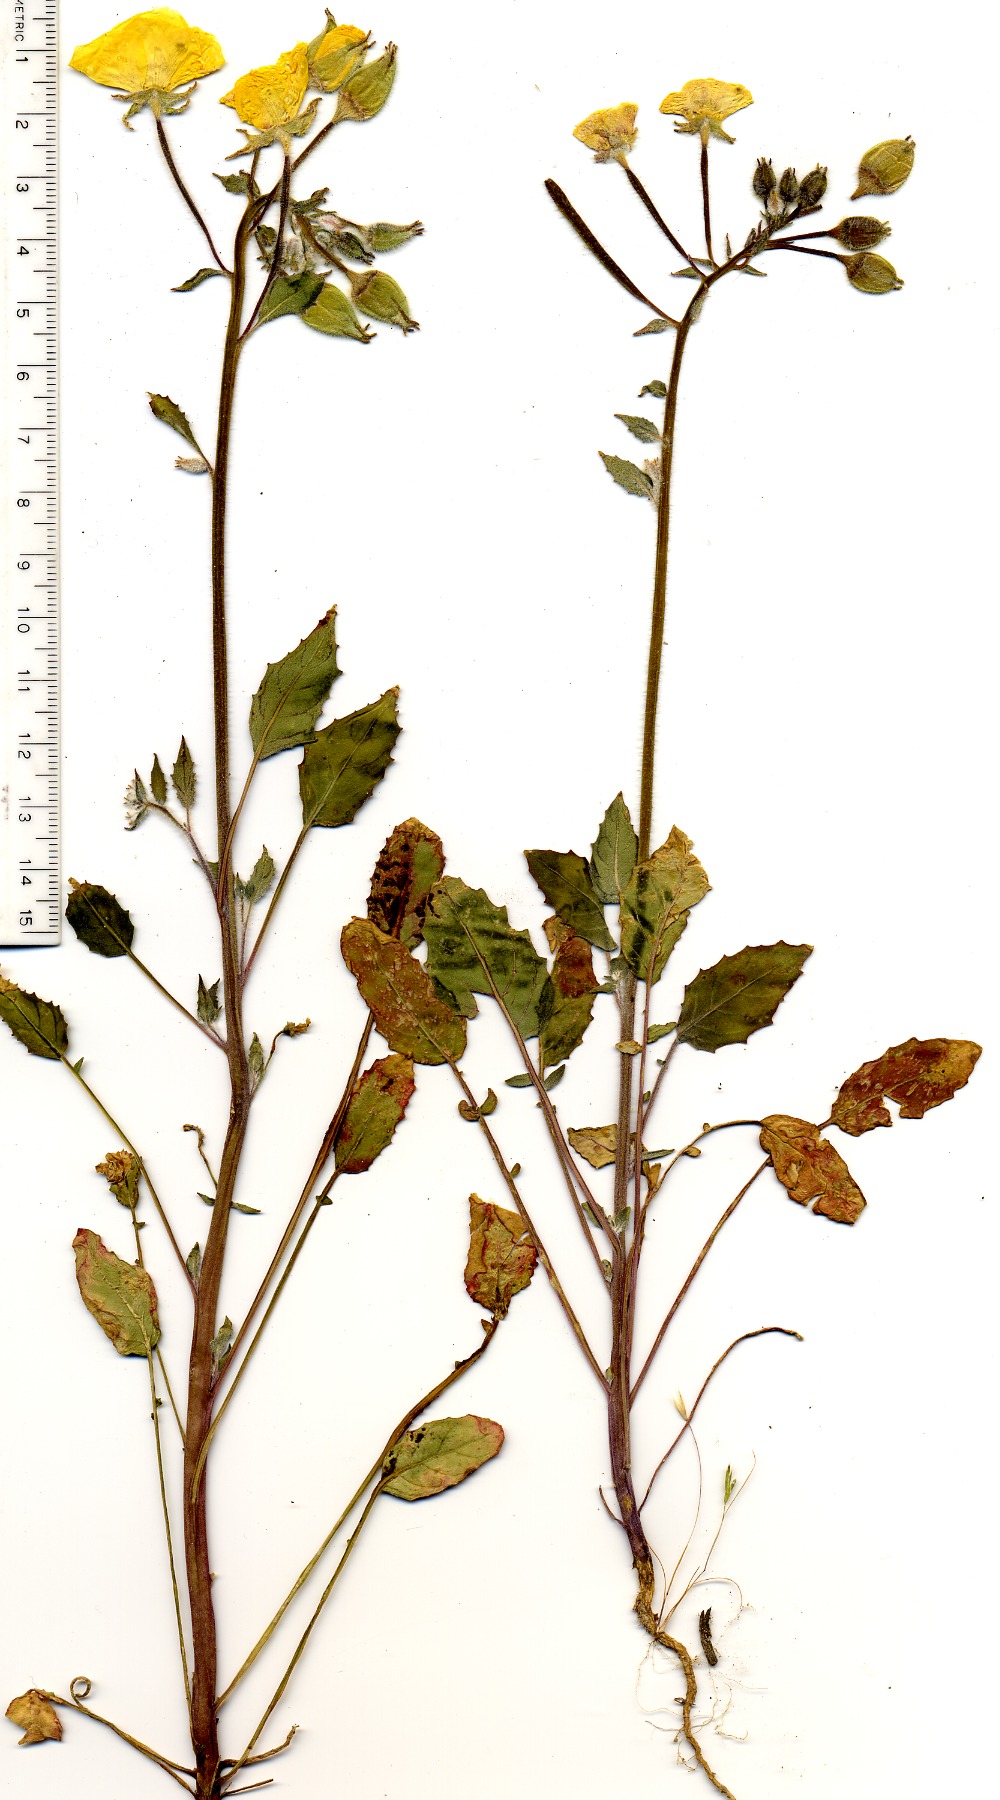 Chylismia claviformis  brevipes, Onagraceae, Mesquite Mountains, San Bernardino County, California